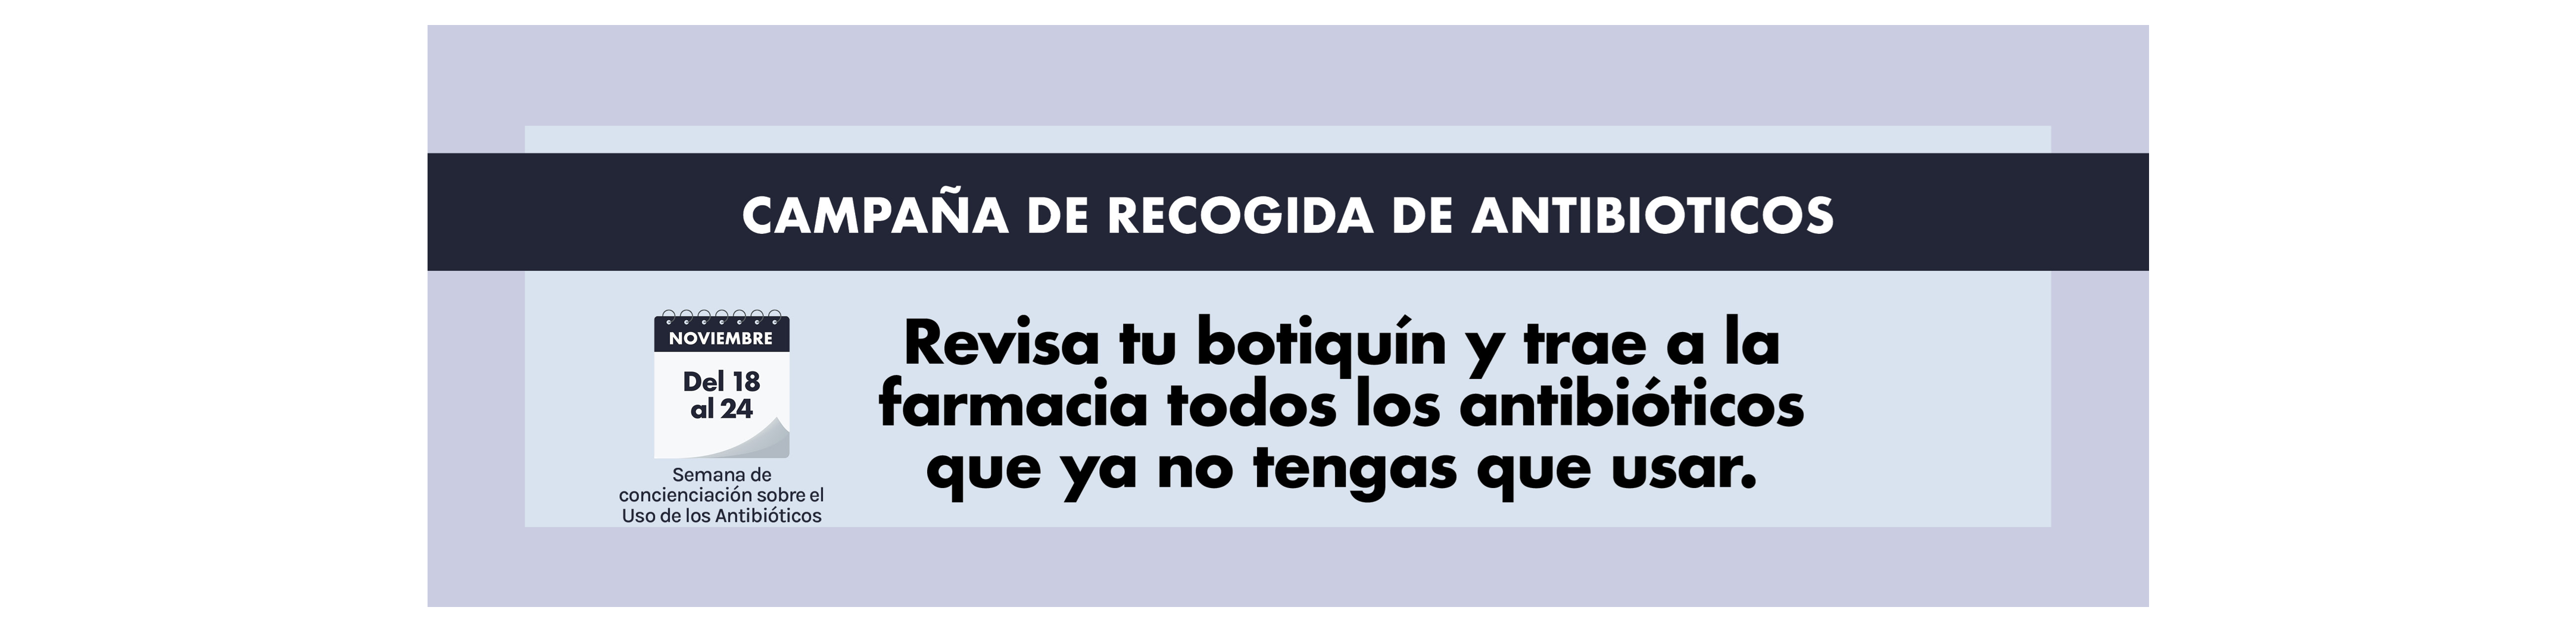 Campaña de recogida de antibióticos